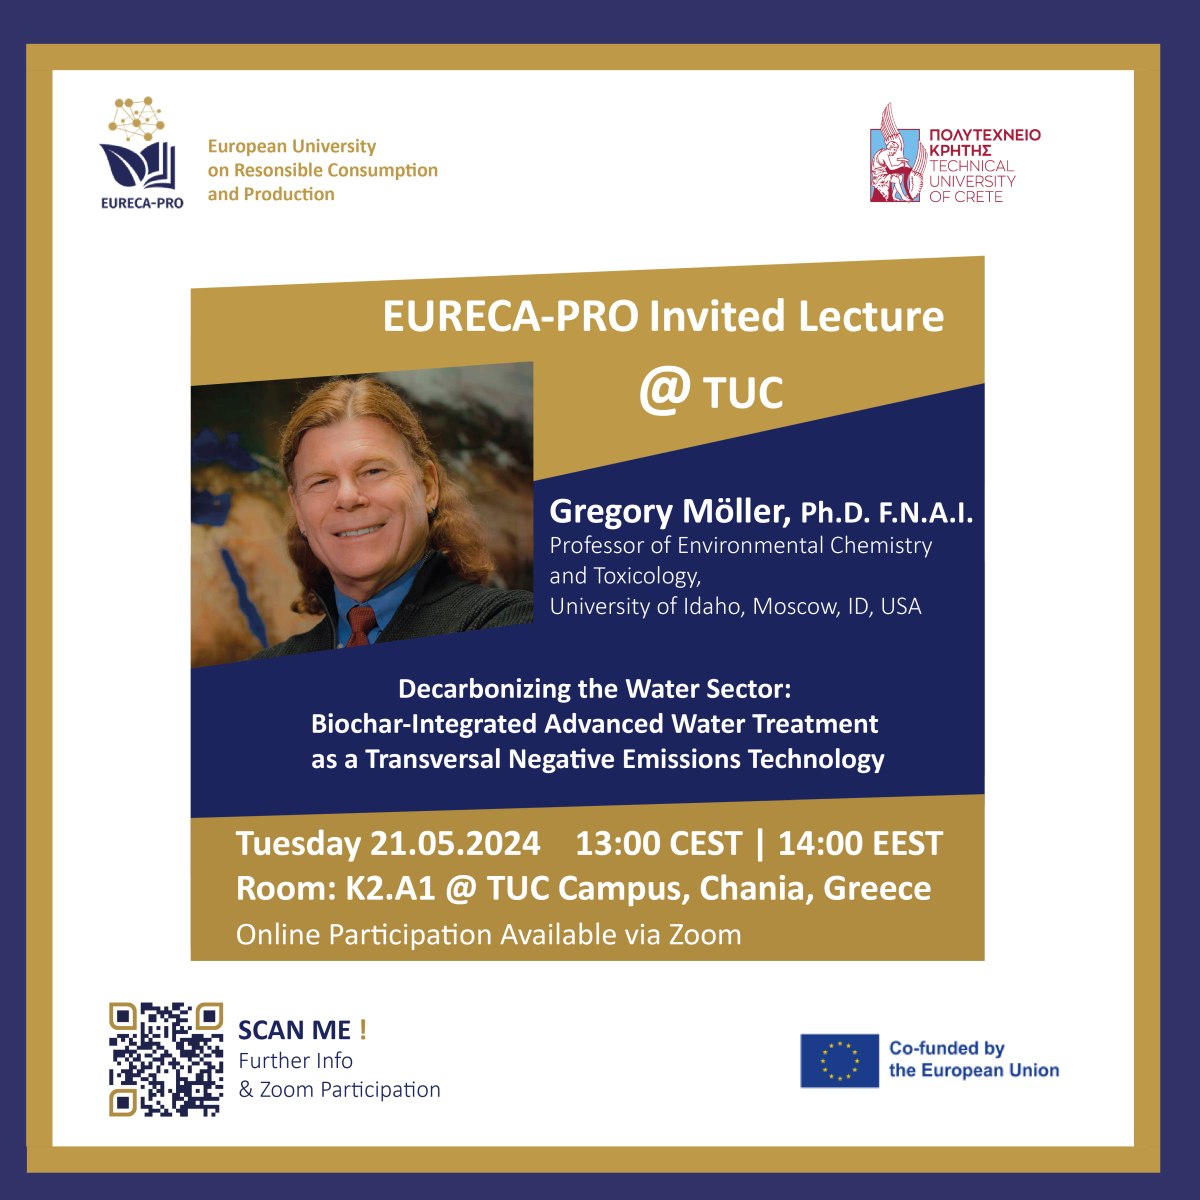 EURECA-PRO Invited Lecture at TUC